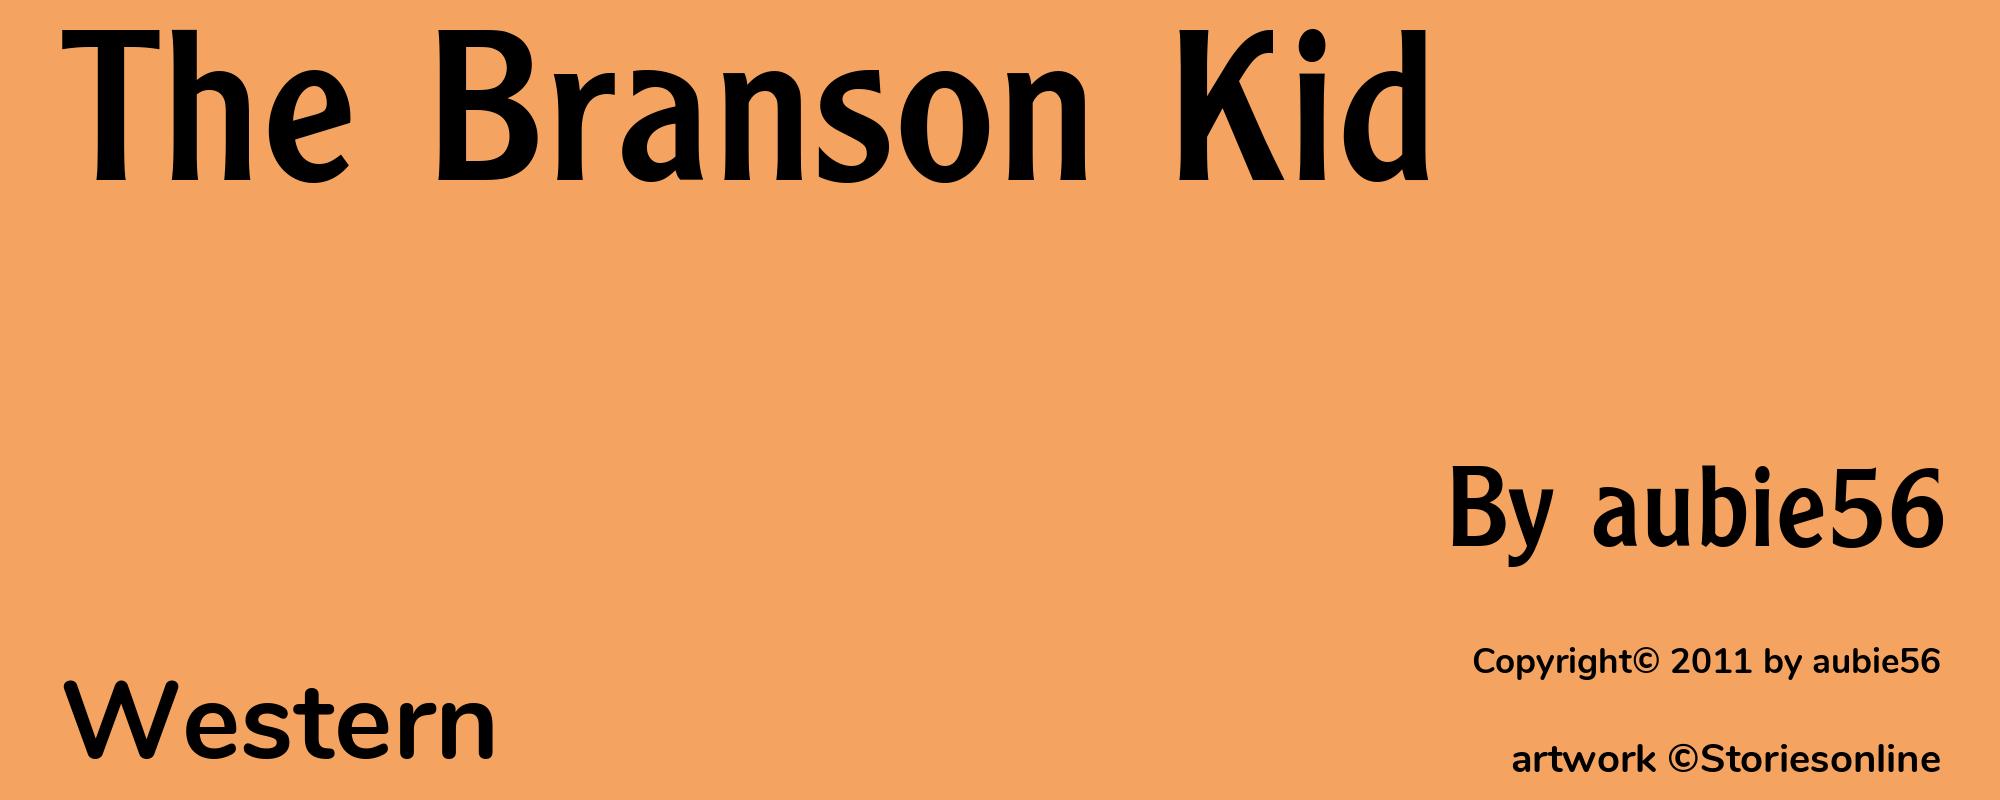 The Branson Kid - Cover